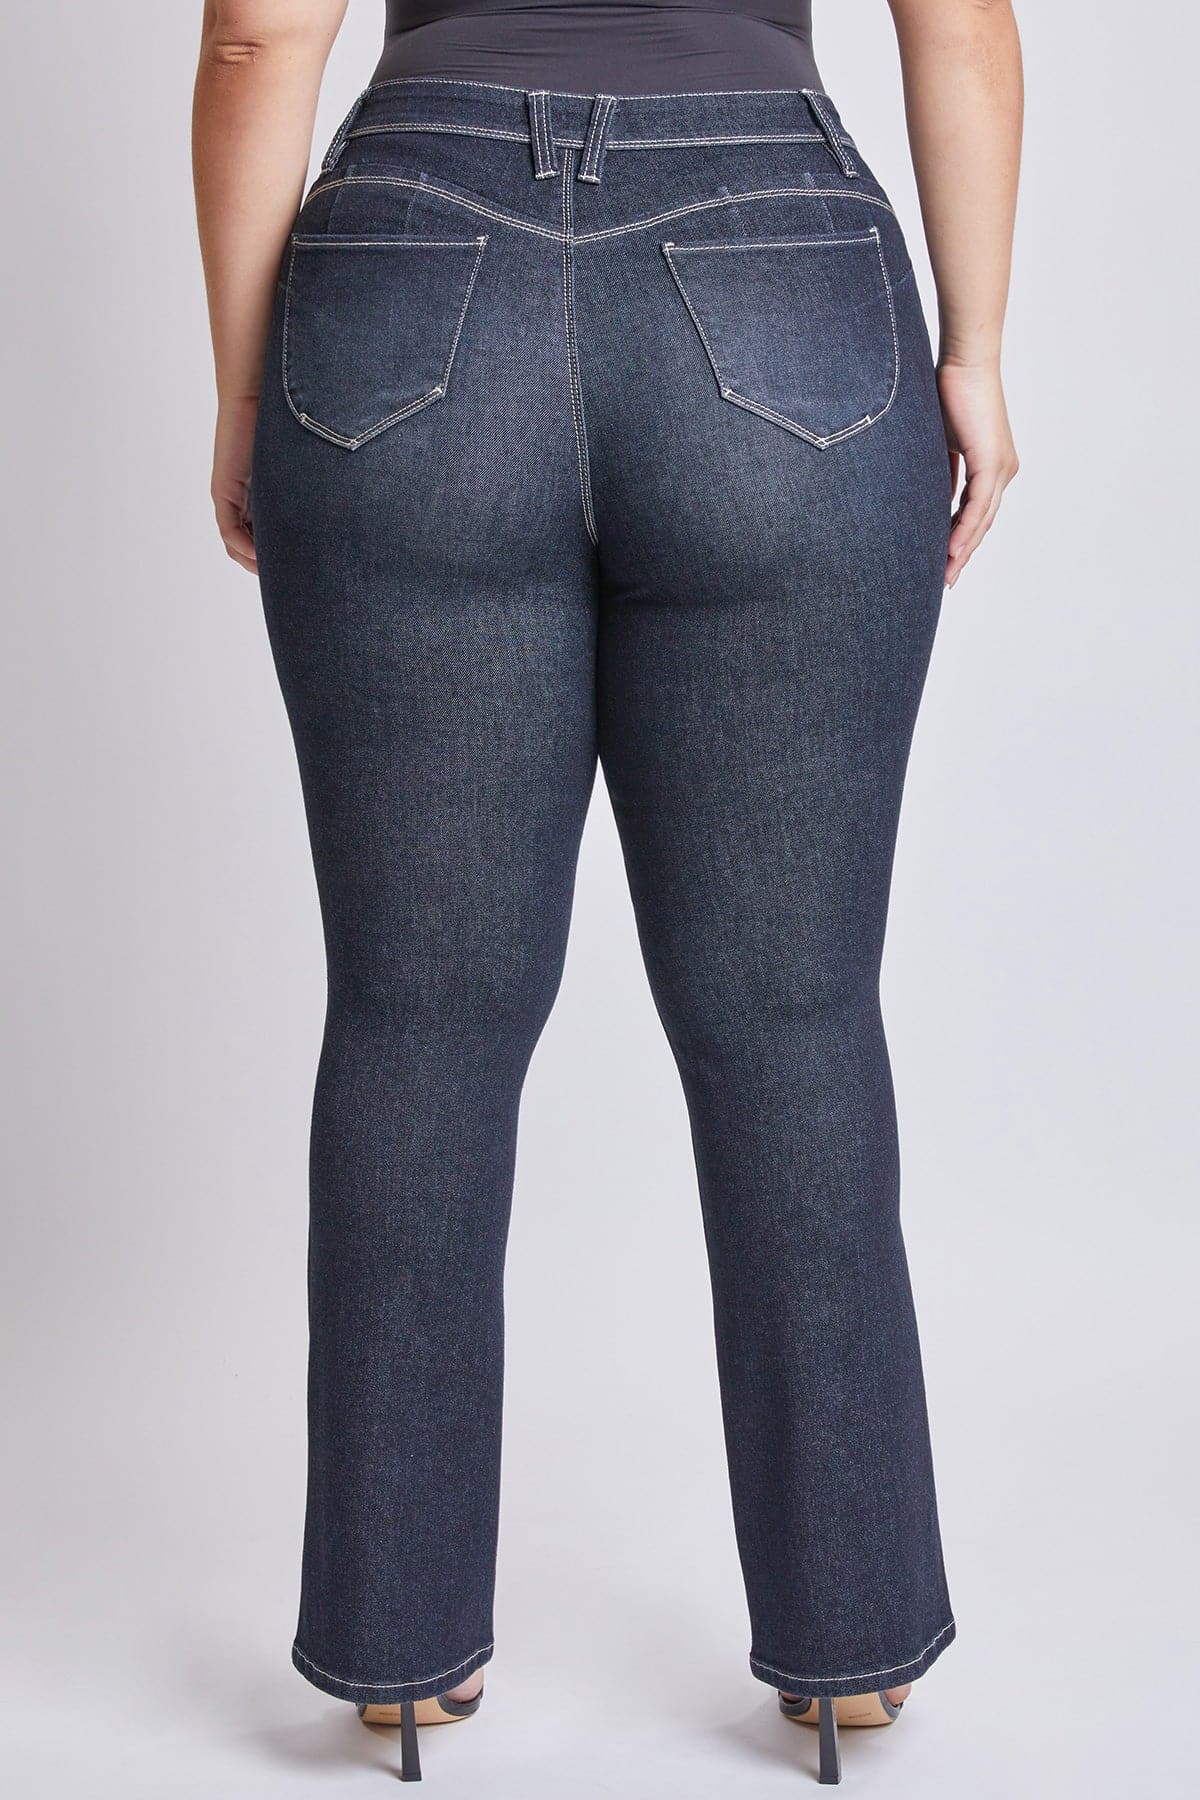 Plus Size Women's Sustainable WannaBettaButt Mid Rise Bootcut Jeans